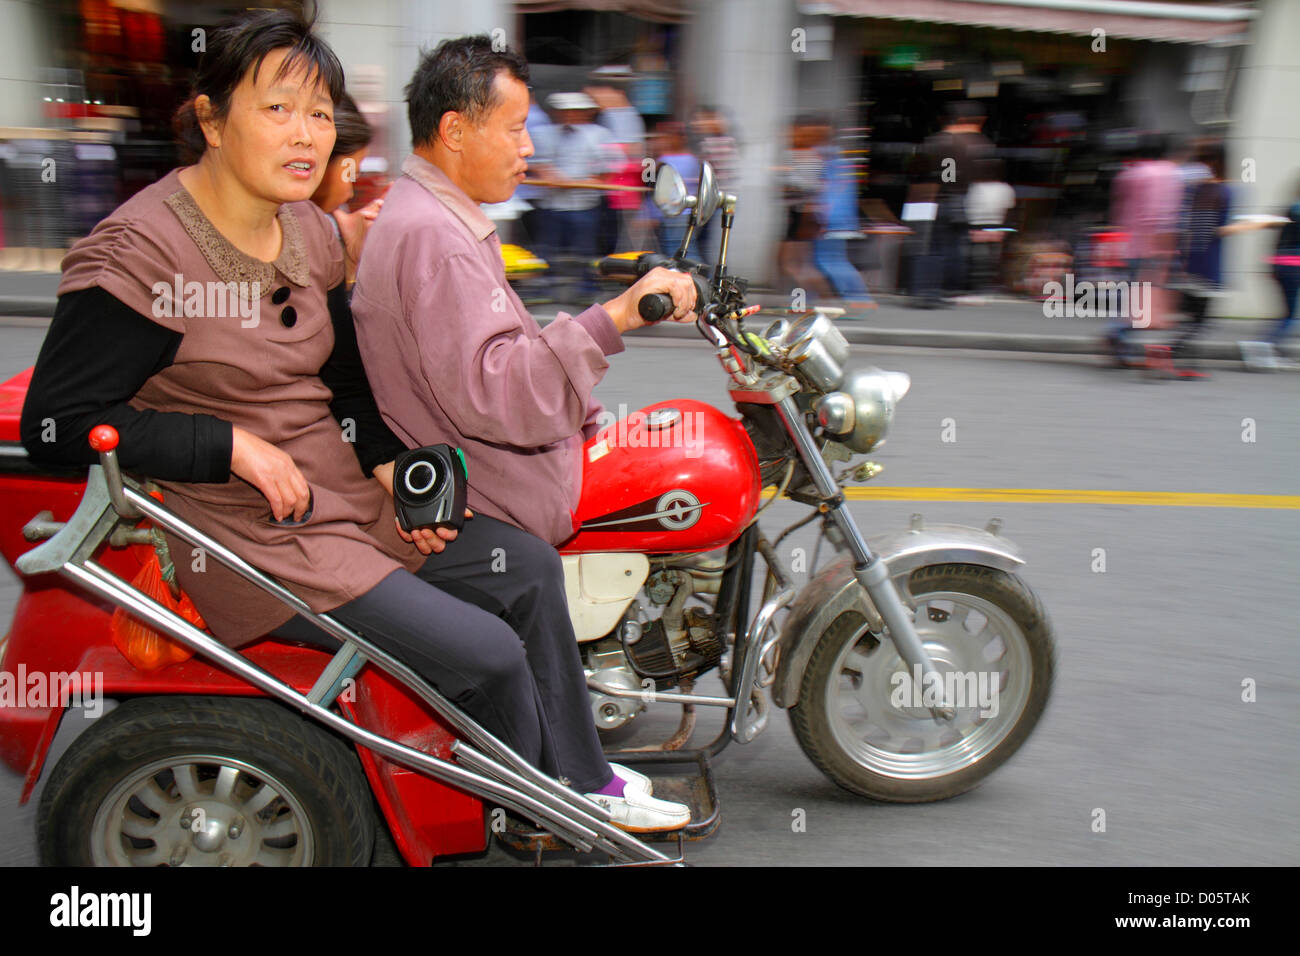 Shanghai Cina,Asia,Cinese,Orientale,Huangpu District,Sichuan Road,Asian Asian Asian,adulti uomo uomo uomini maschio,donna donna donna donna donna donna donna donna donna donna donna donna moto motociclista Foto Stock